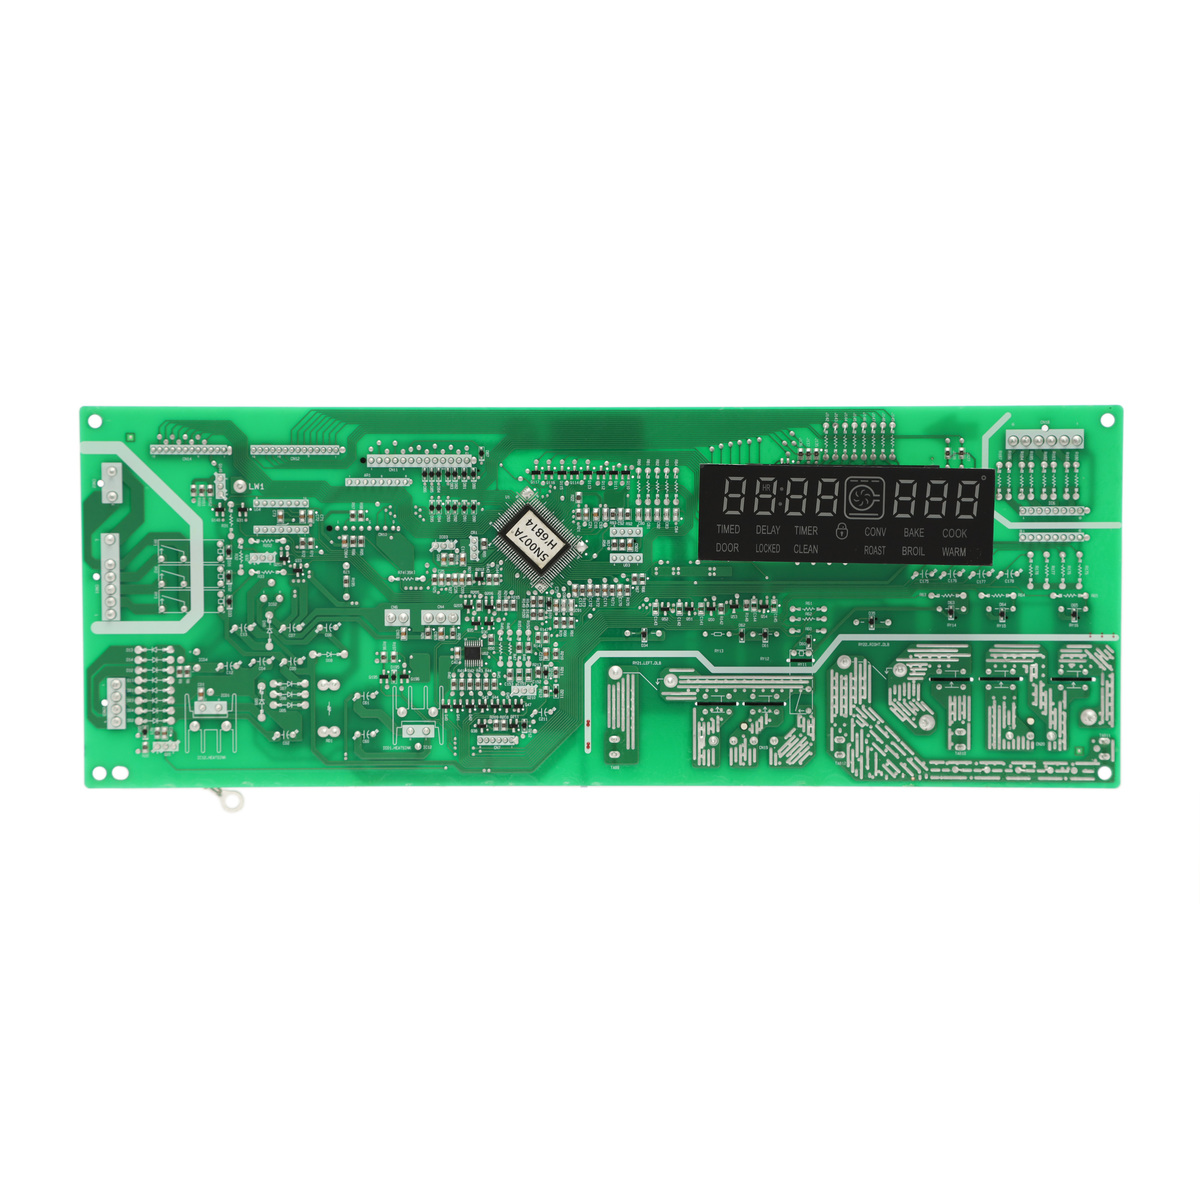 LG Range Oven Control Board. Part #EBR74632606